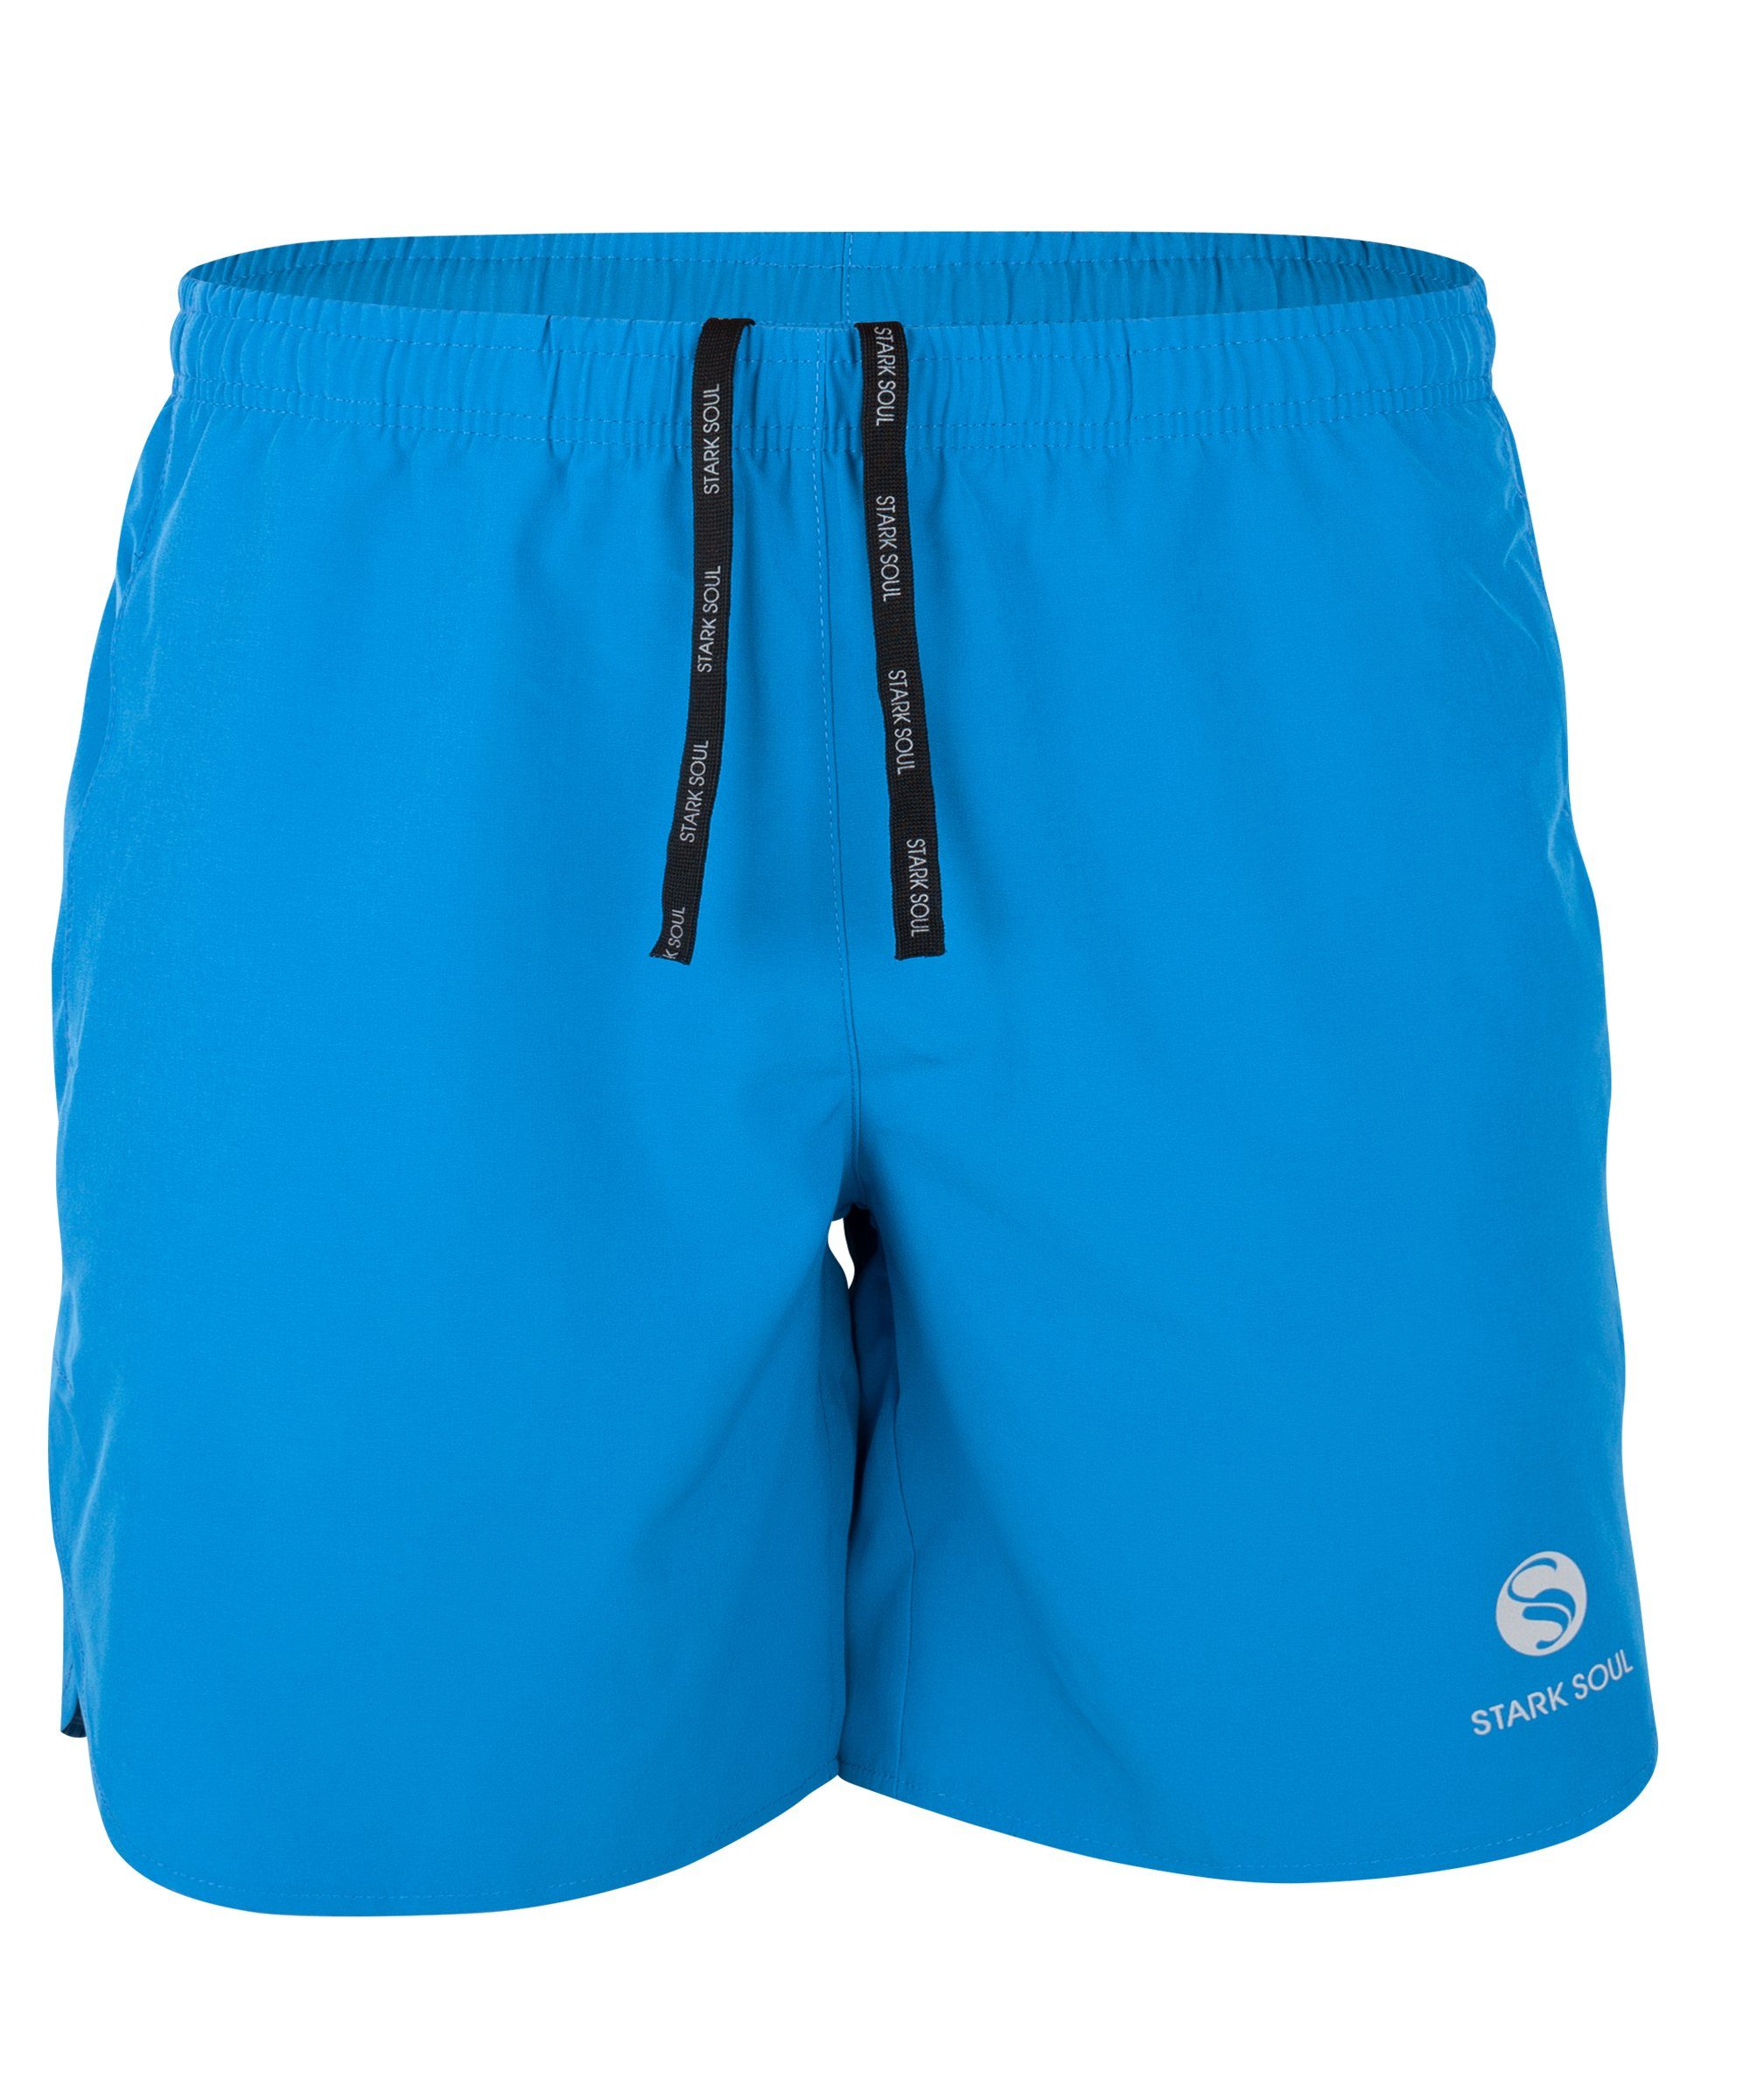 Stark Soul® Funktionshose kurze Sporthose aus Quick Dry Material - Schnelltrocknend Blau